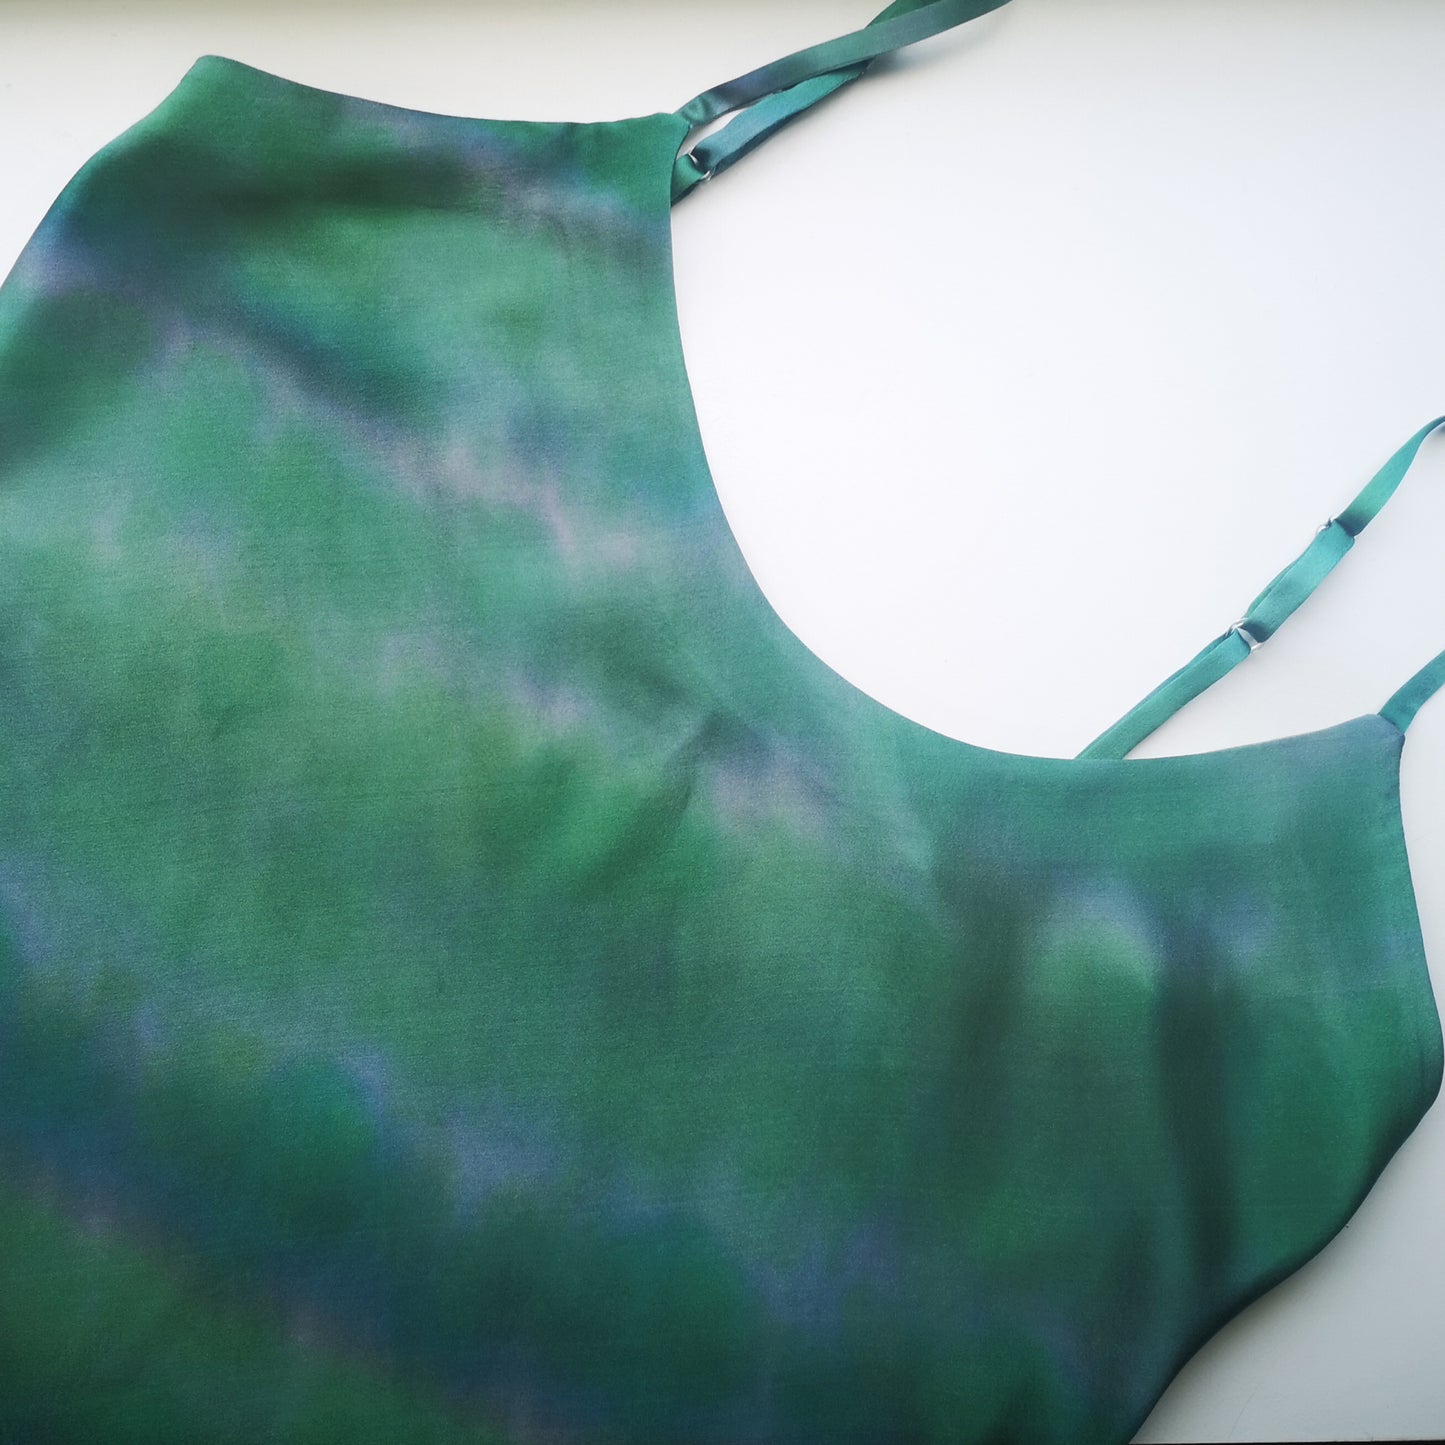 Khaki Greens Hand-painted silk camisole